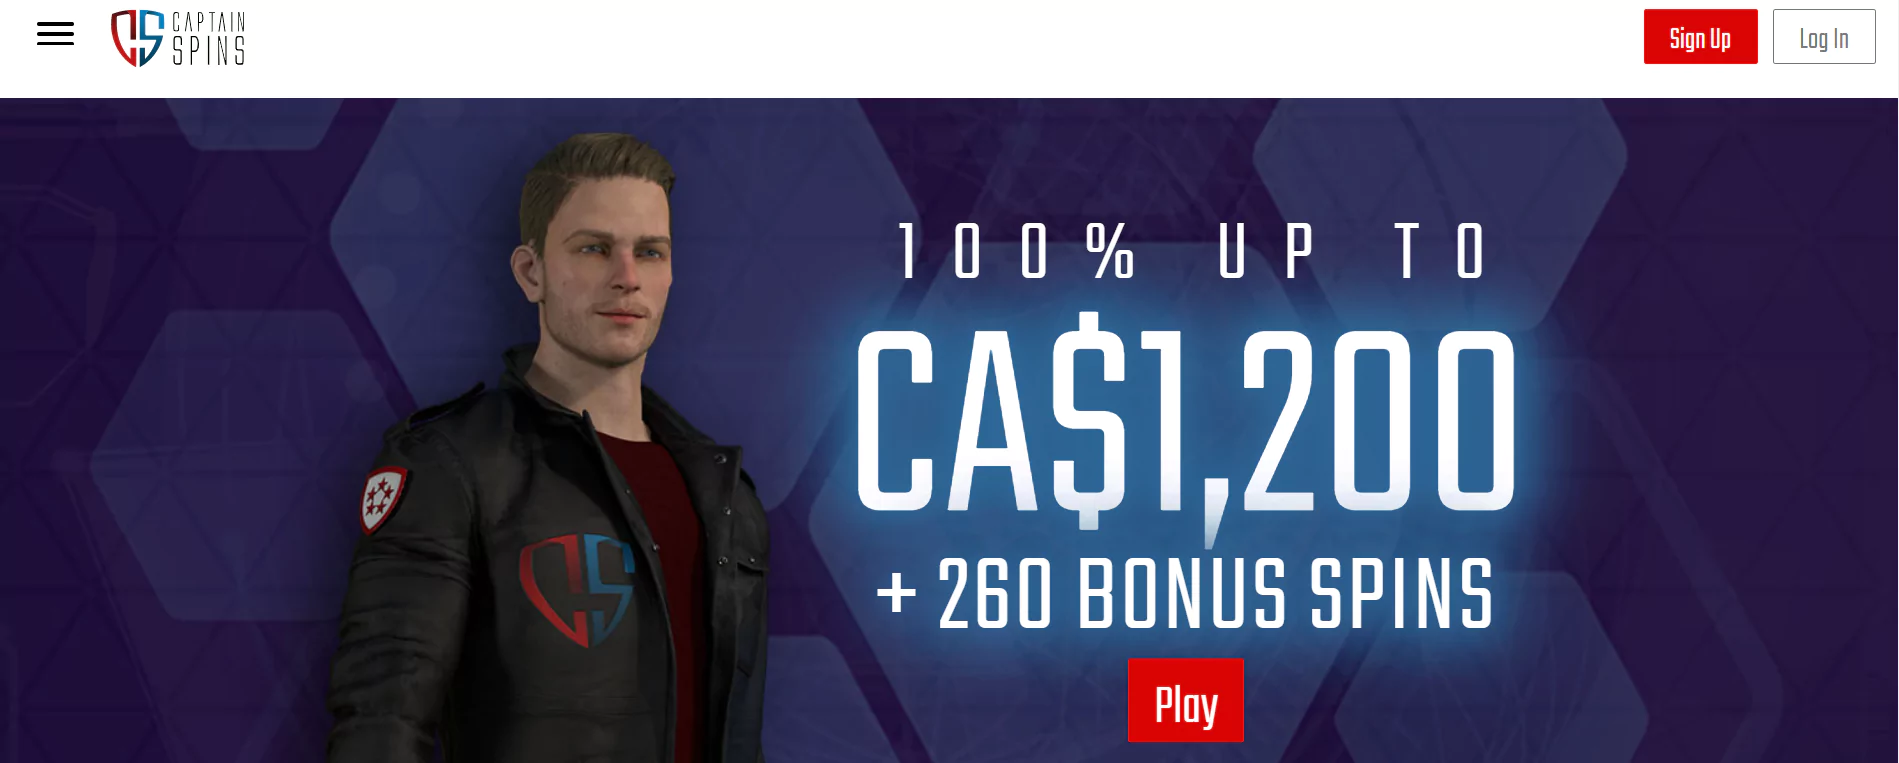 Screenshot of Capitan Spin - Minimum $10 Deposit Casino for Canadians